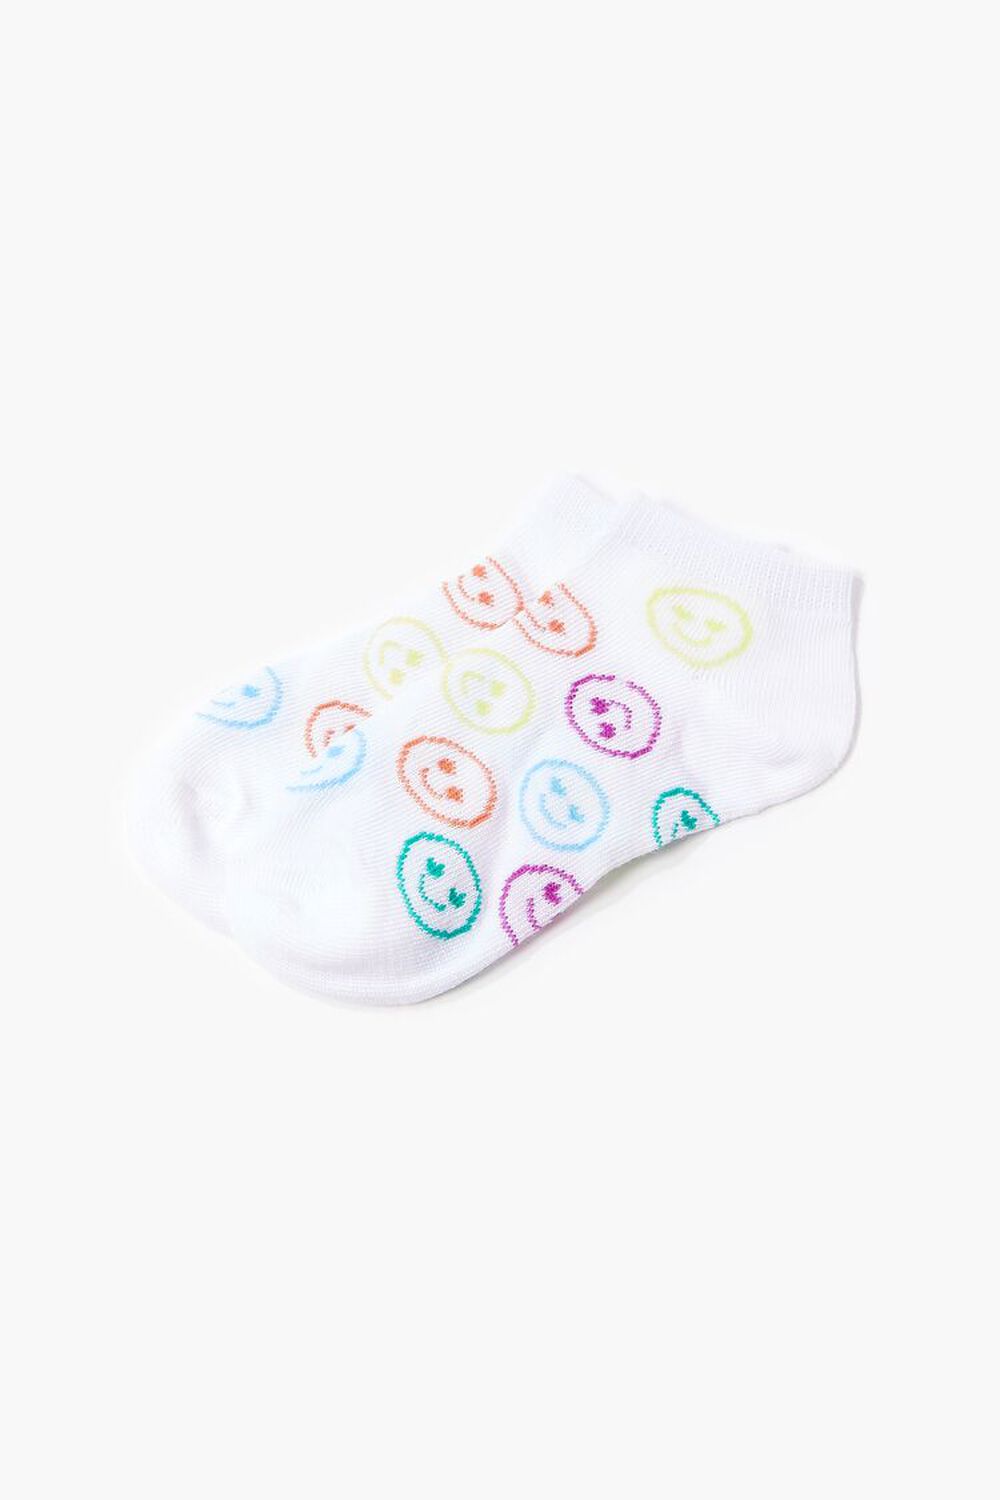 WHITE/MULTI Girls Happy Face Print Ankle Socks (Kids), image 1